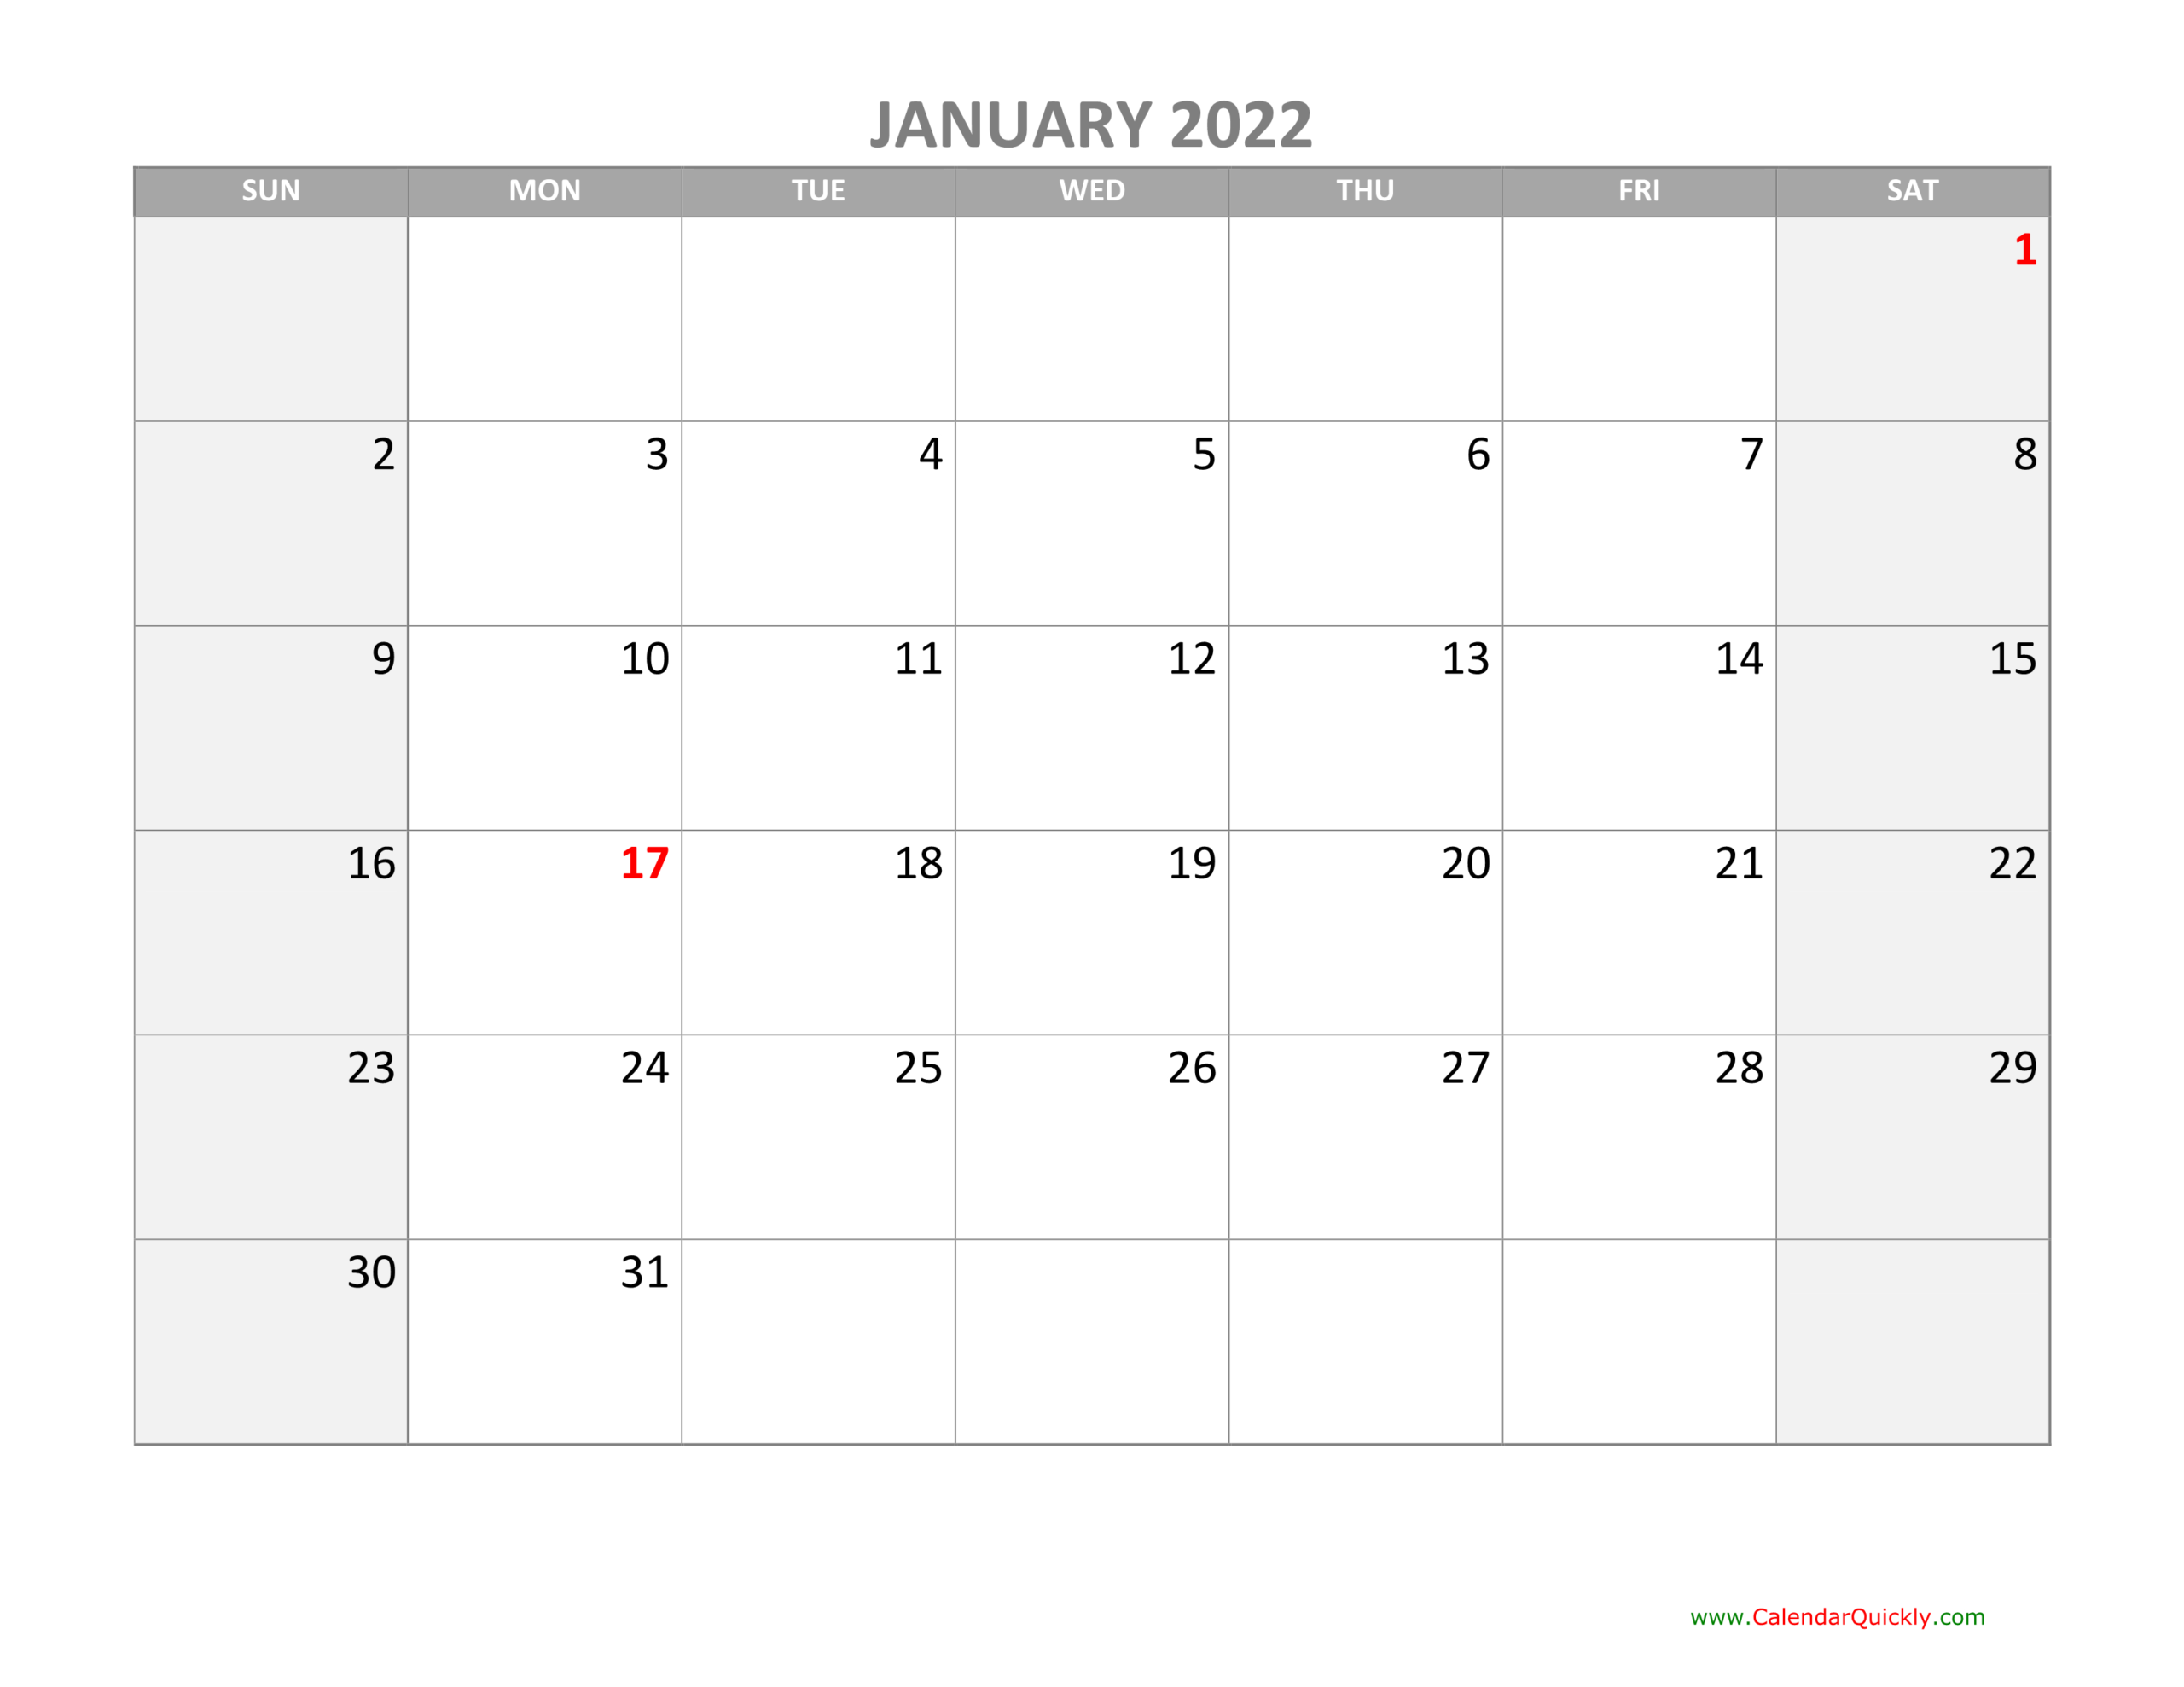 Catch Daily Sheet Calendar February 2022